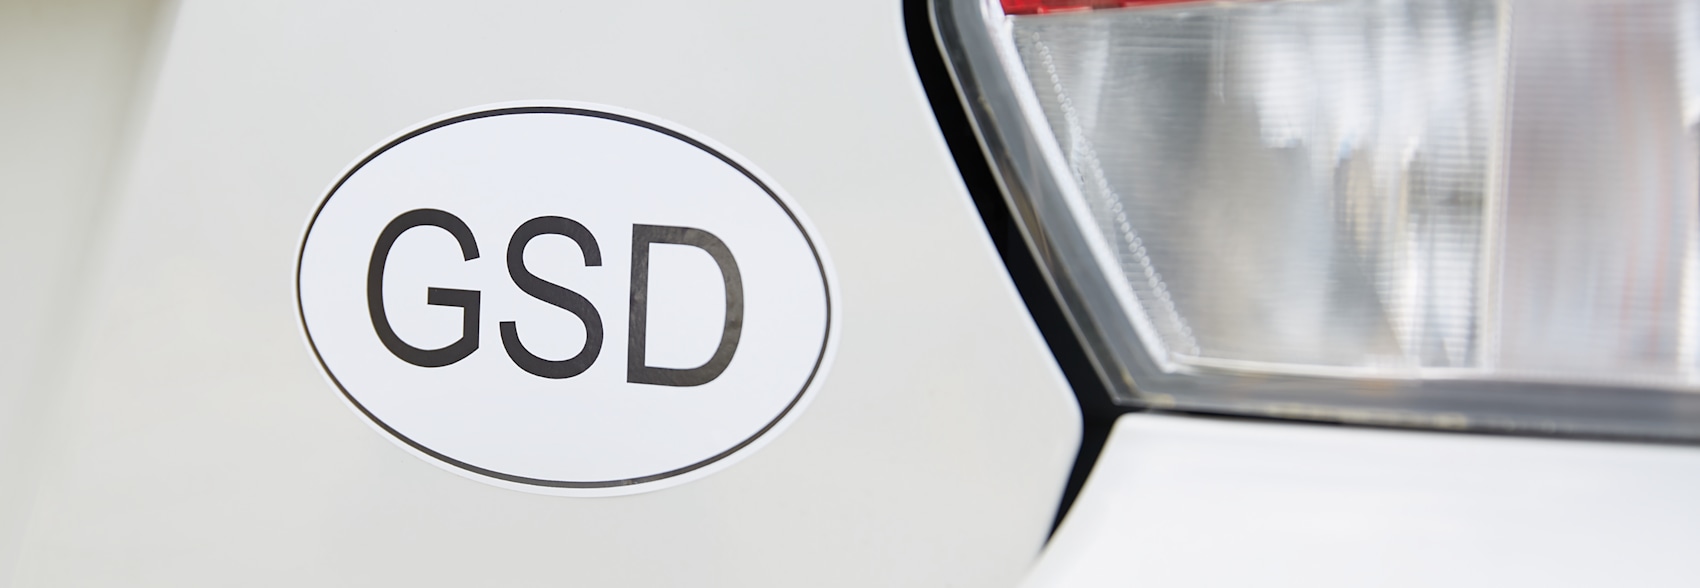 1 Custom Printed Full Color Vinyl Car Bumper Sticker Logo Decal-Up to 40 Sq in 